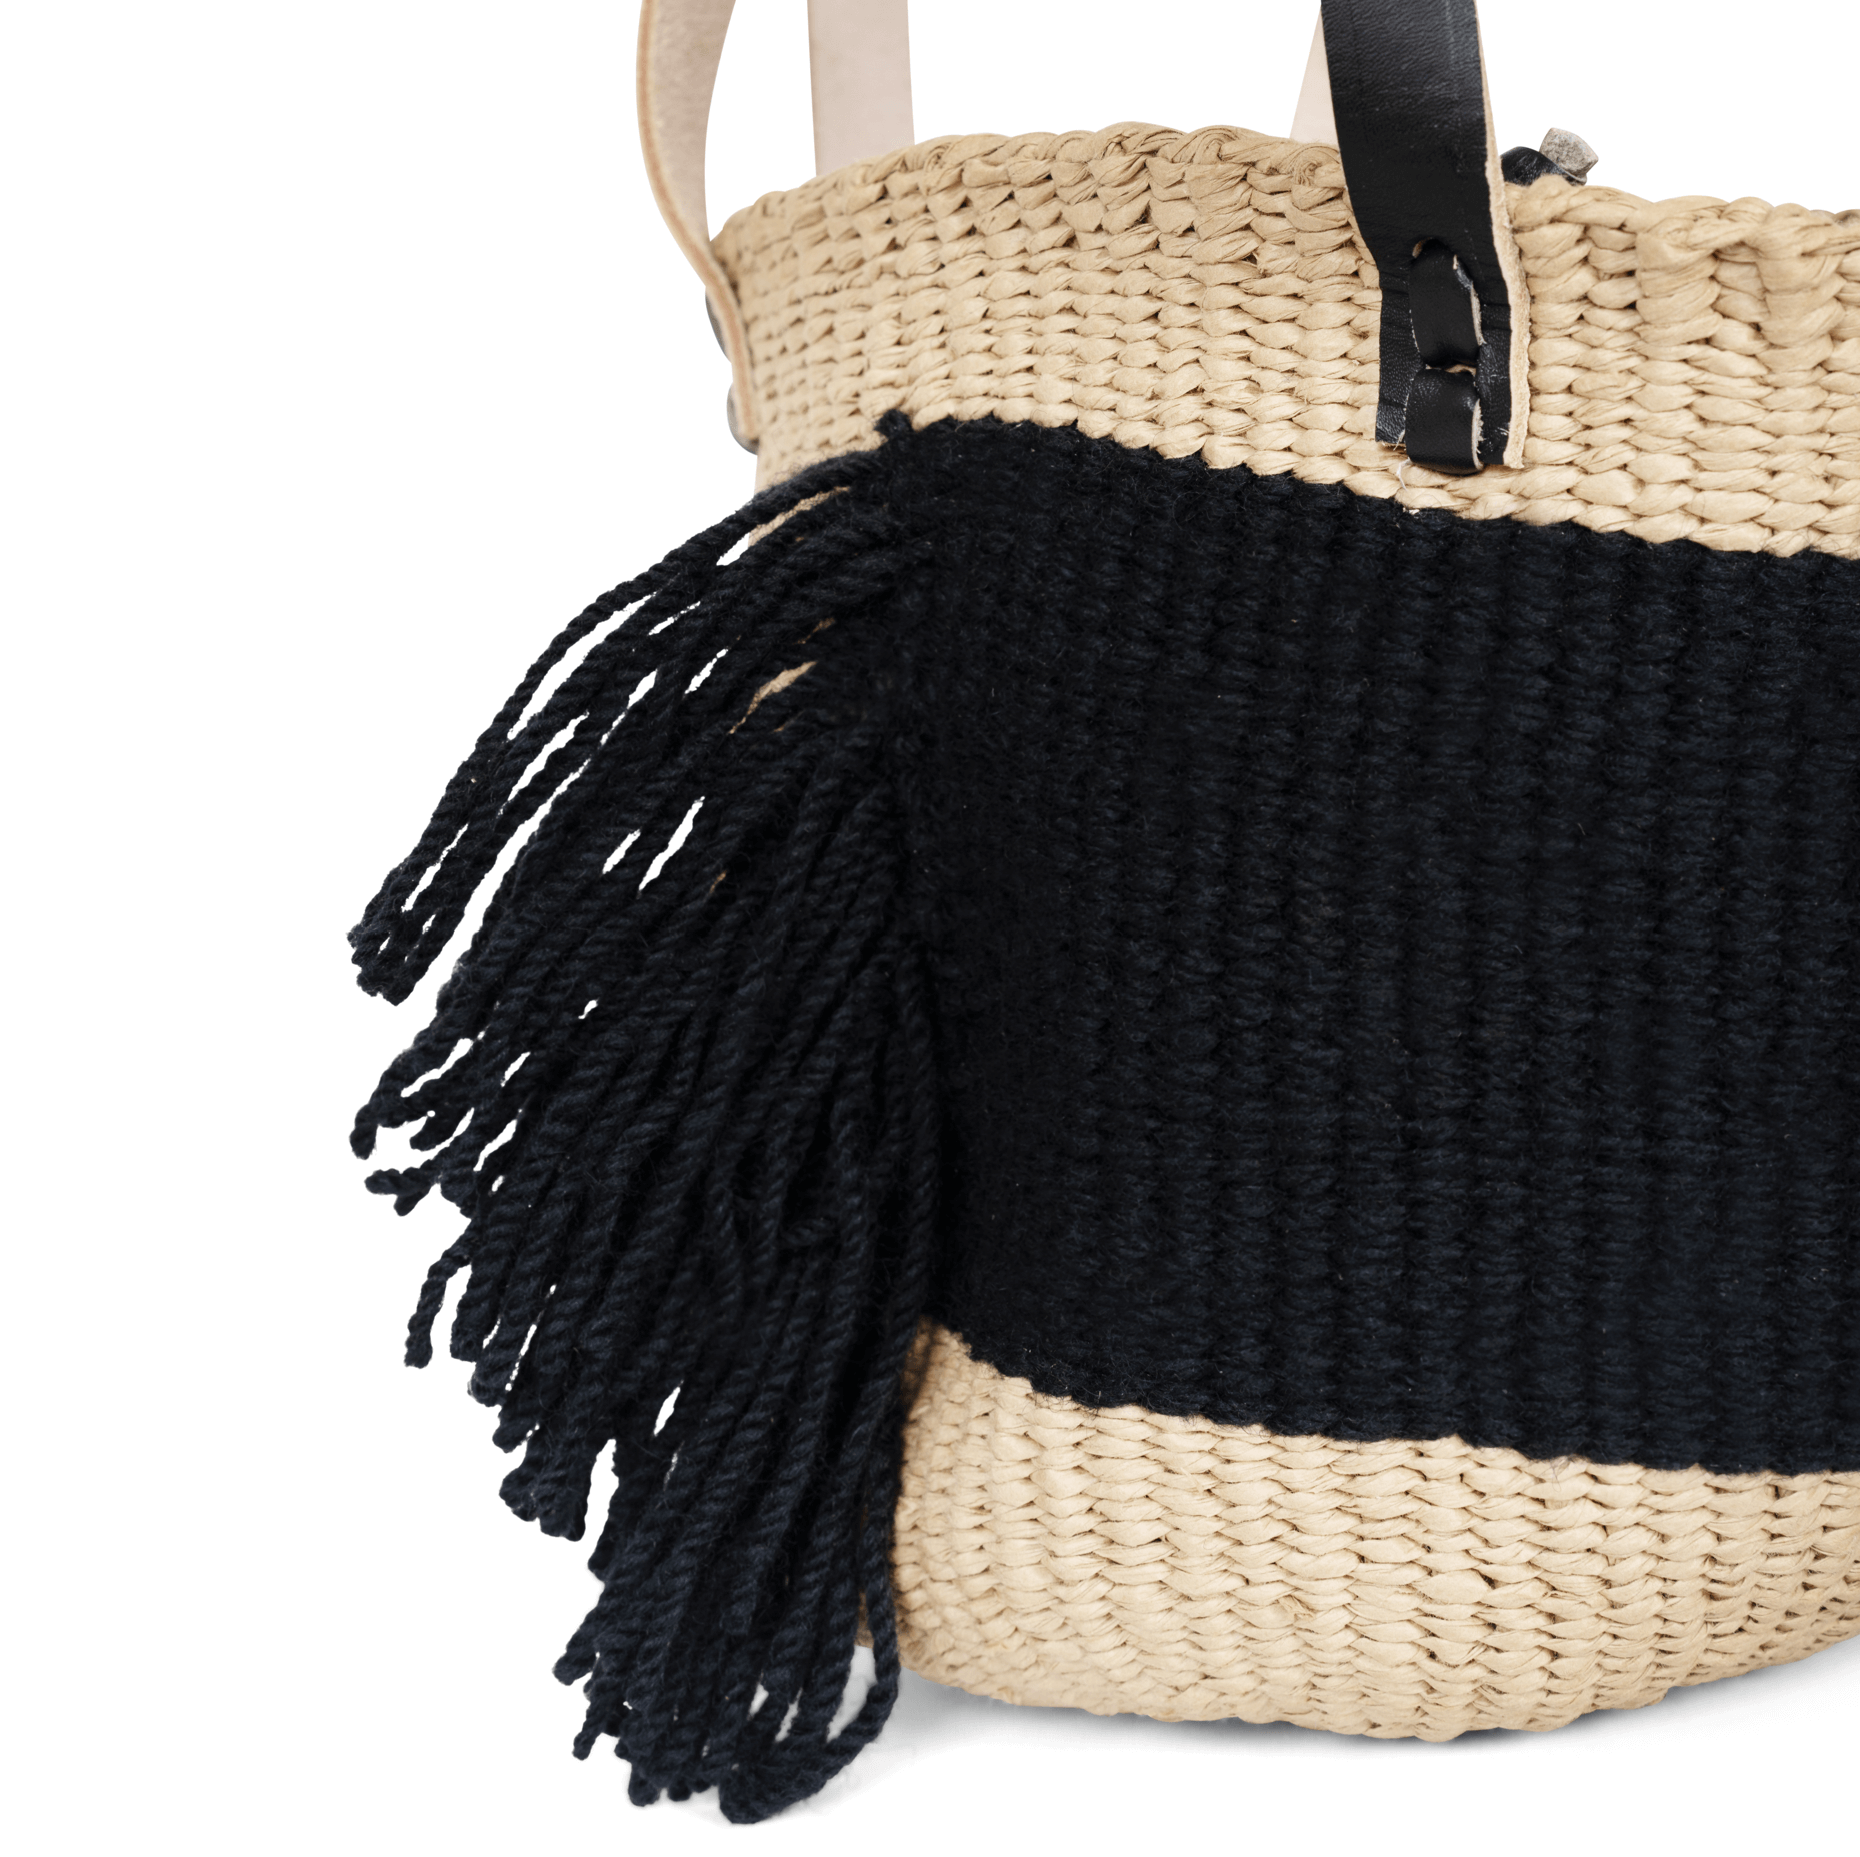 Mifuko Wool and paper Shopper basket XS Pamba shopper basket | Ervin Latimer design black XS